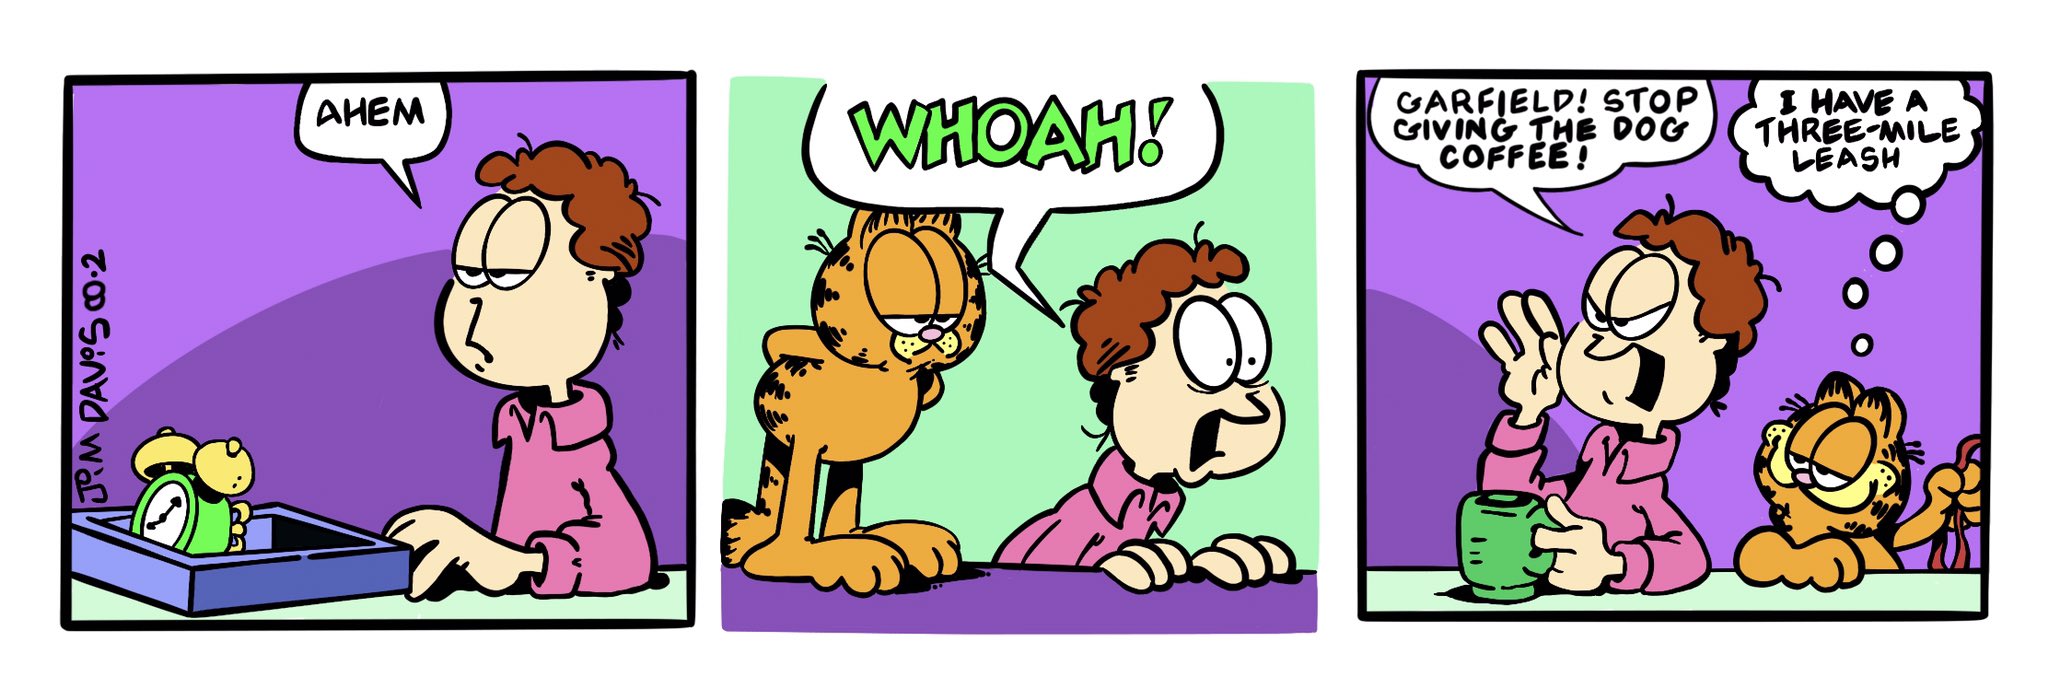 Funny Garfield Comics on Twitter: "Funny Garfield Comic #3  https://t.co/ZhLS29jvQo" / Twitter